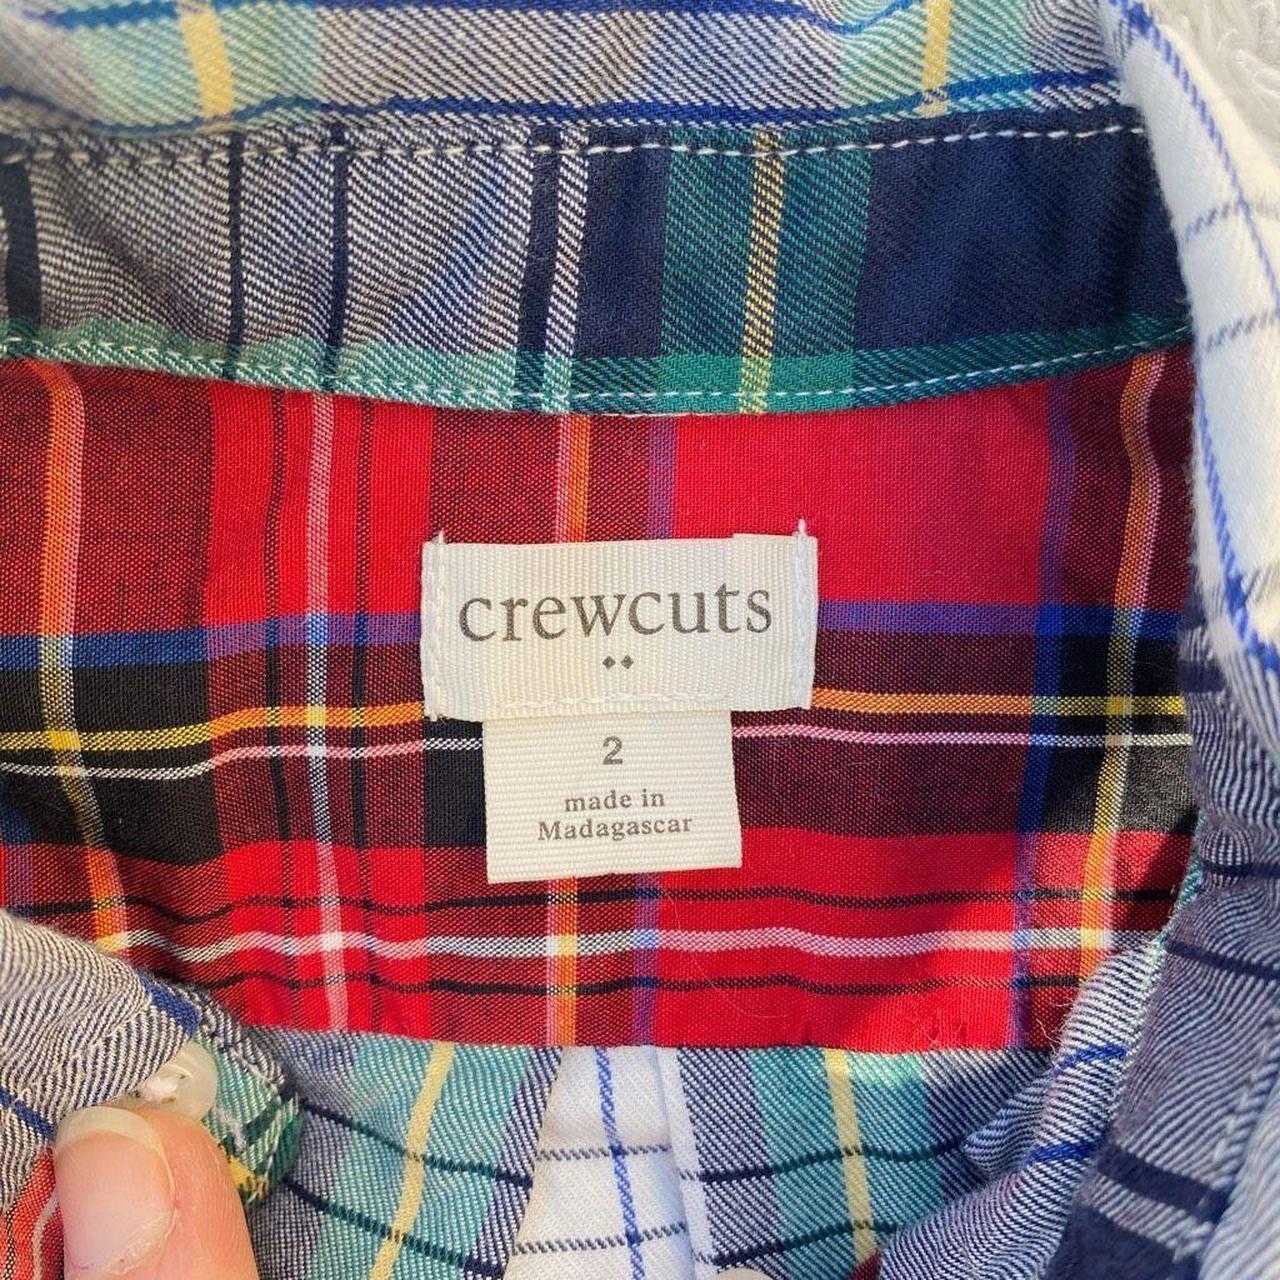 crewcuts by J.Crew Boys' Plaid Shirt, Red Tartan, 2 years